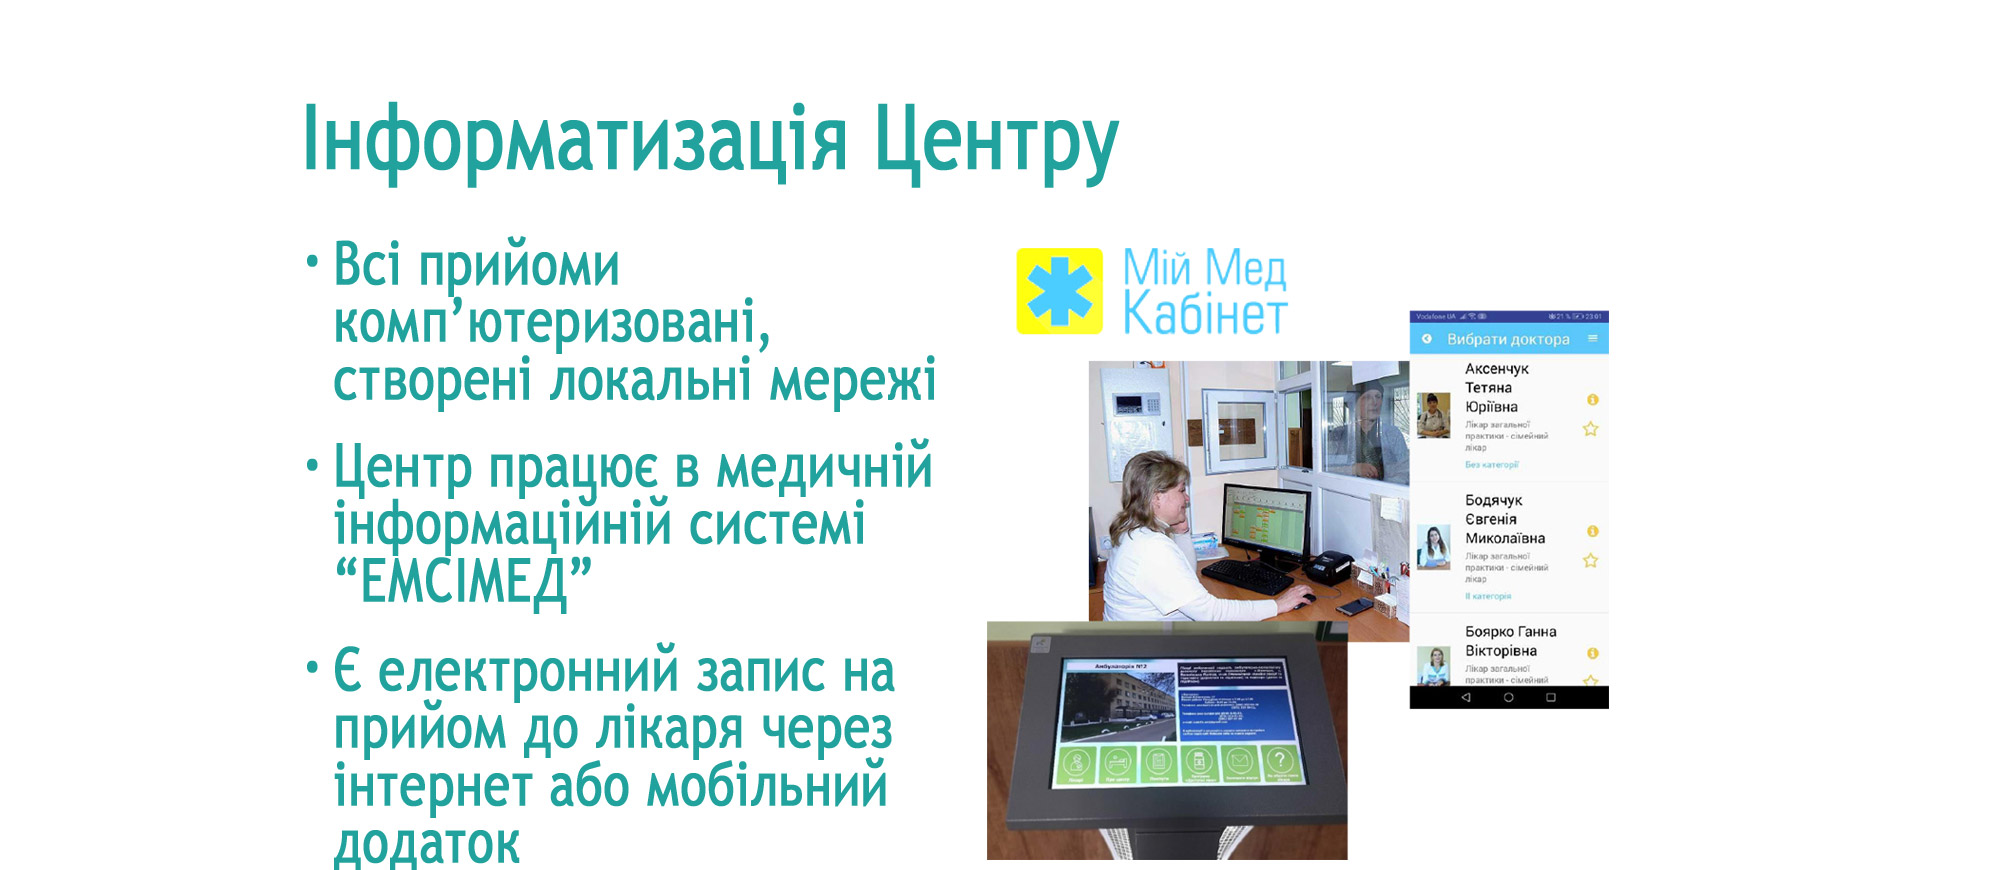 Про центр семейной медицины №1 г. Краматорска, cpmsd1 Kramatorsk Ukraine